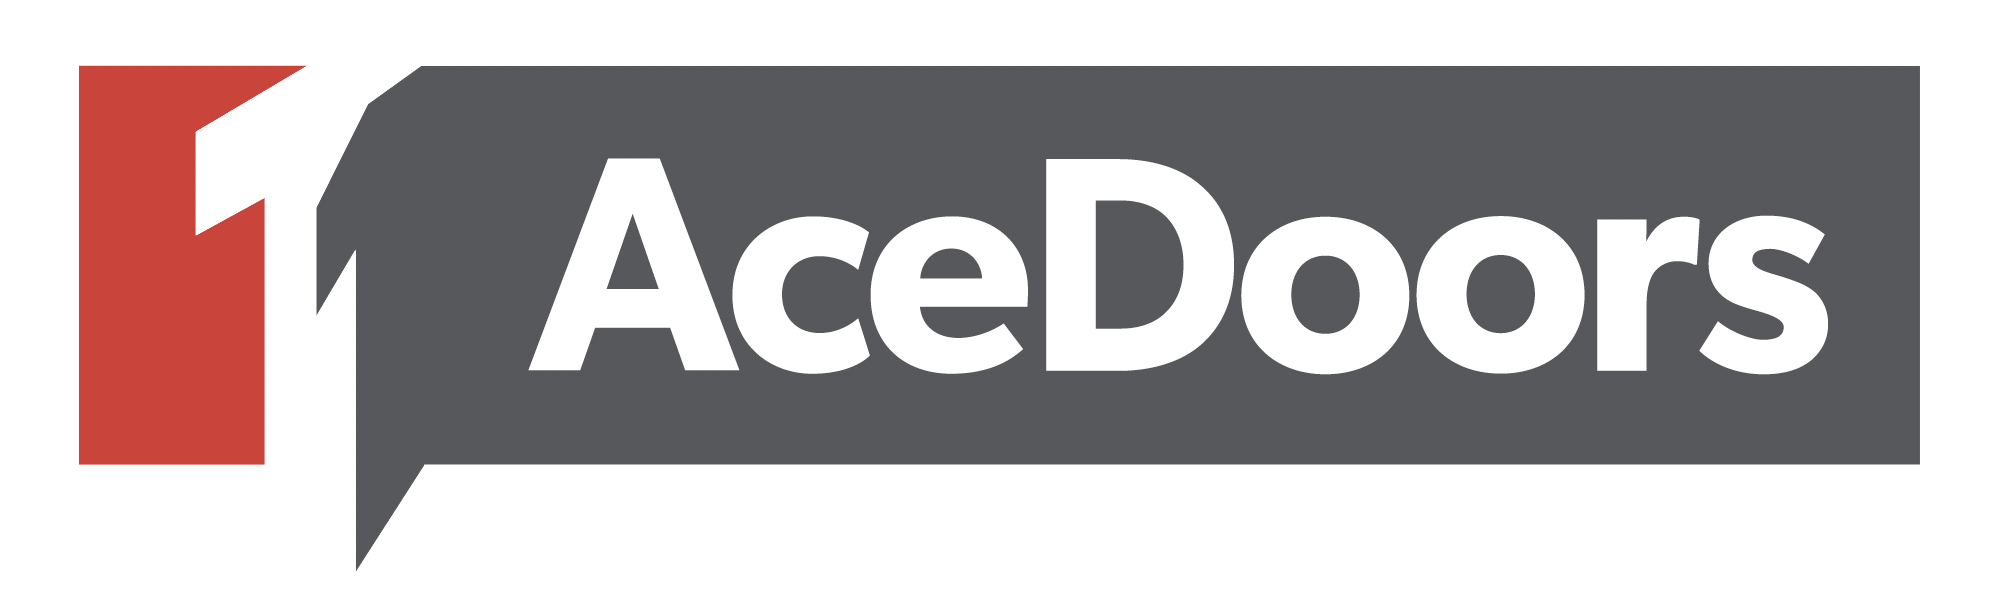 AceDoors Logo Landscape 1